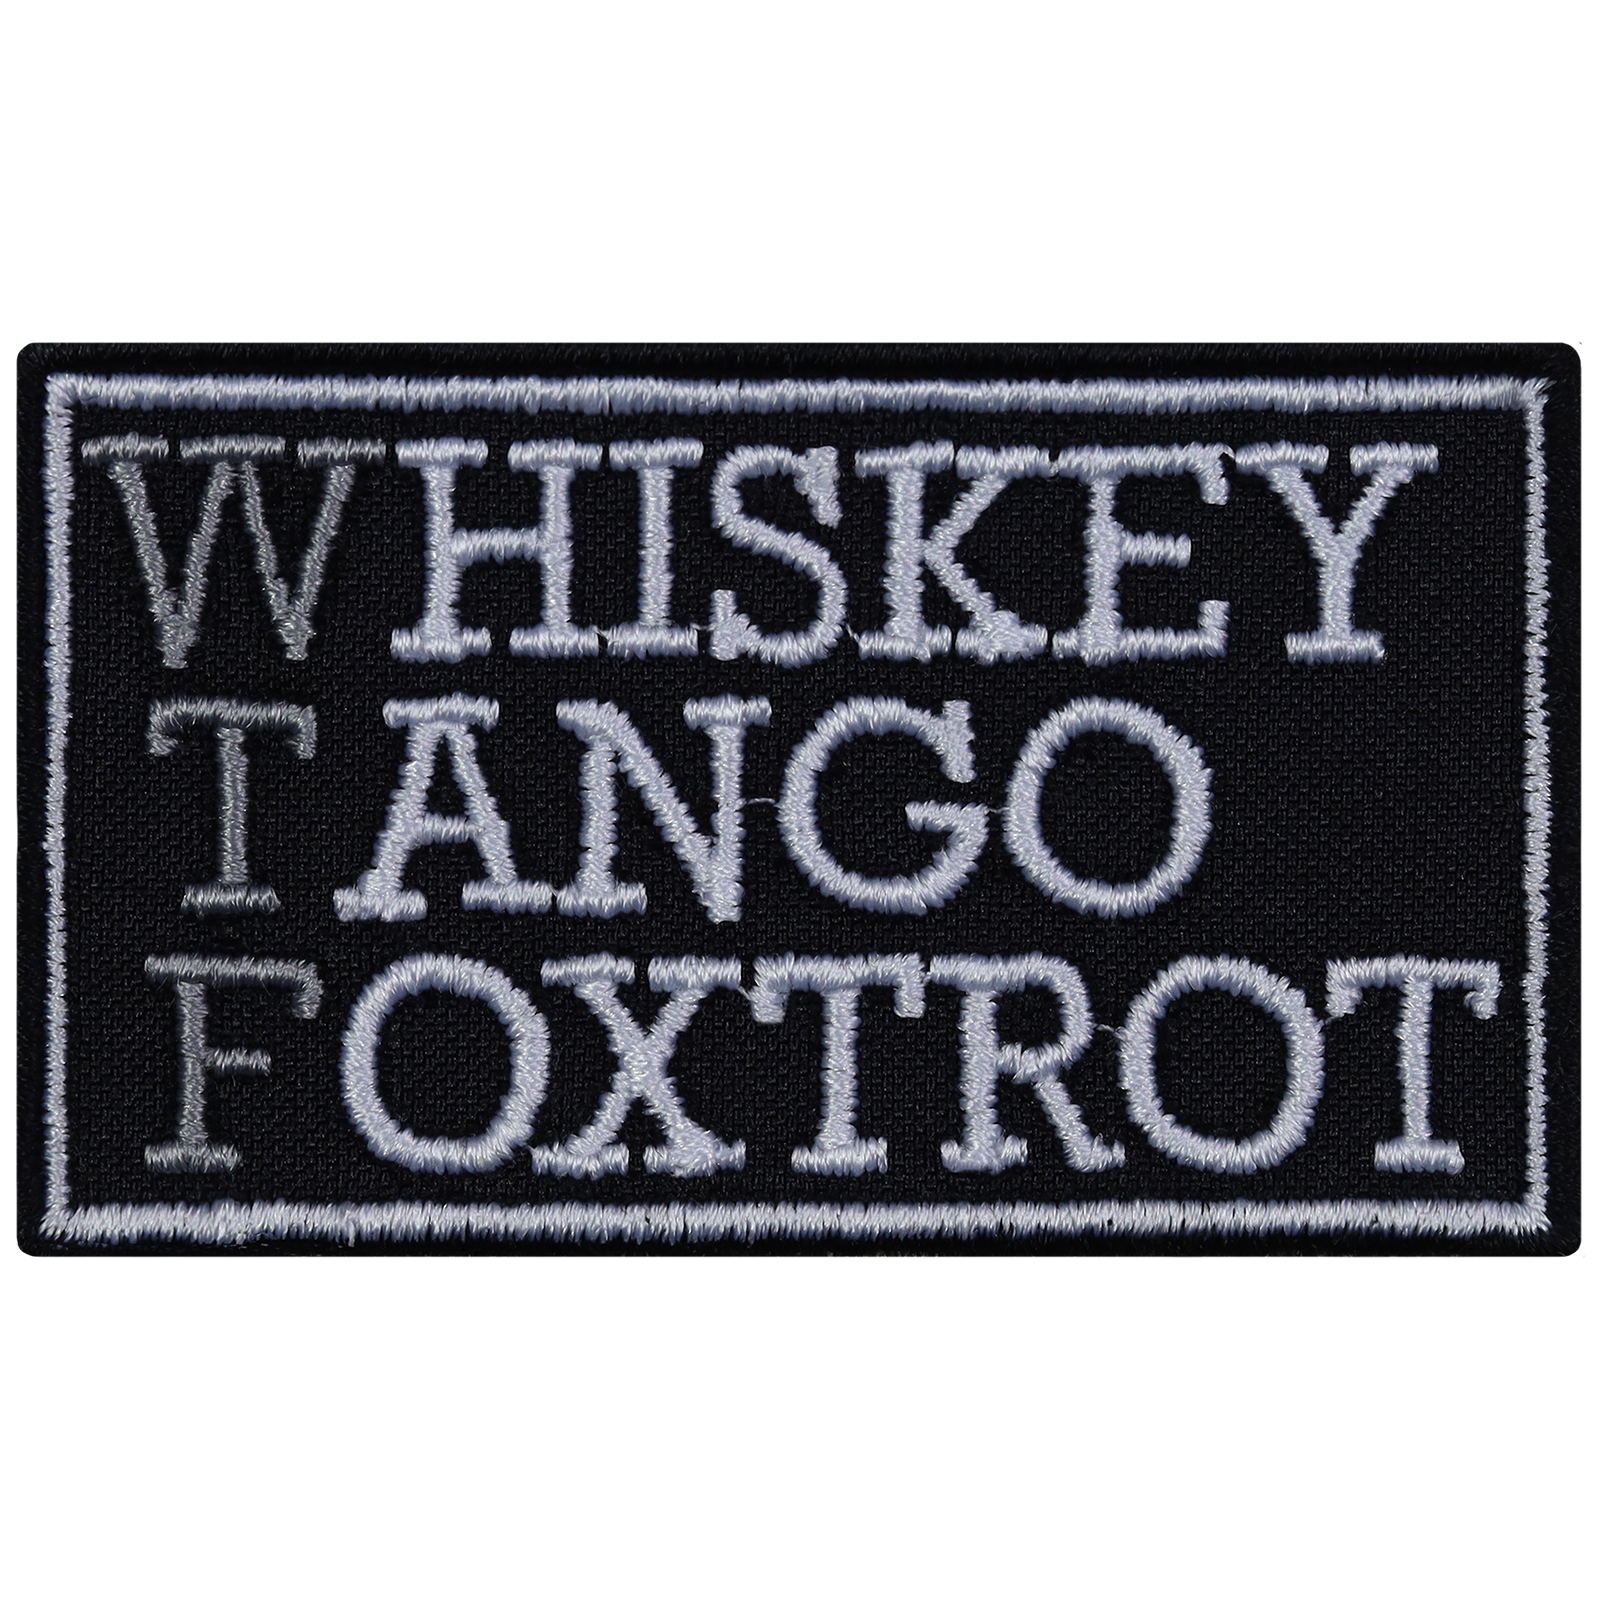 Whiskey Tango Foxtrot - Patch